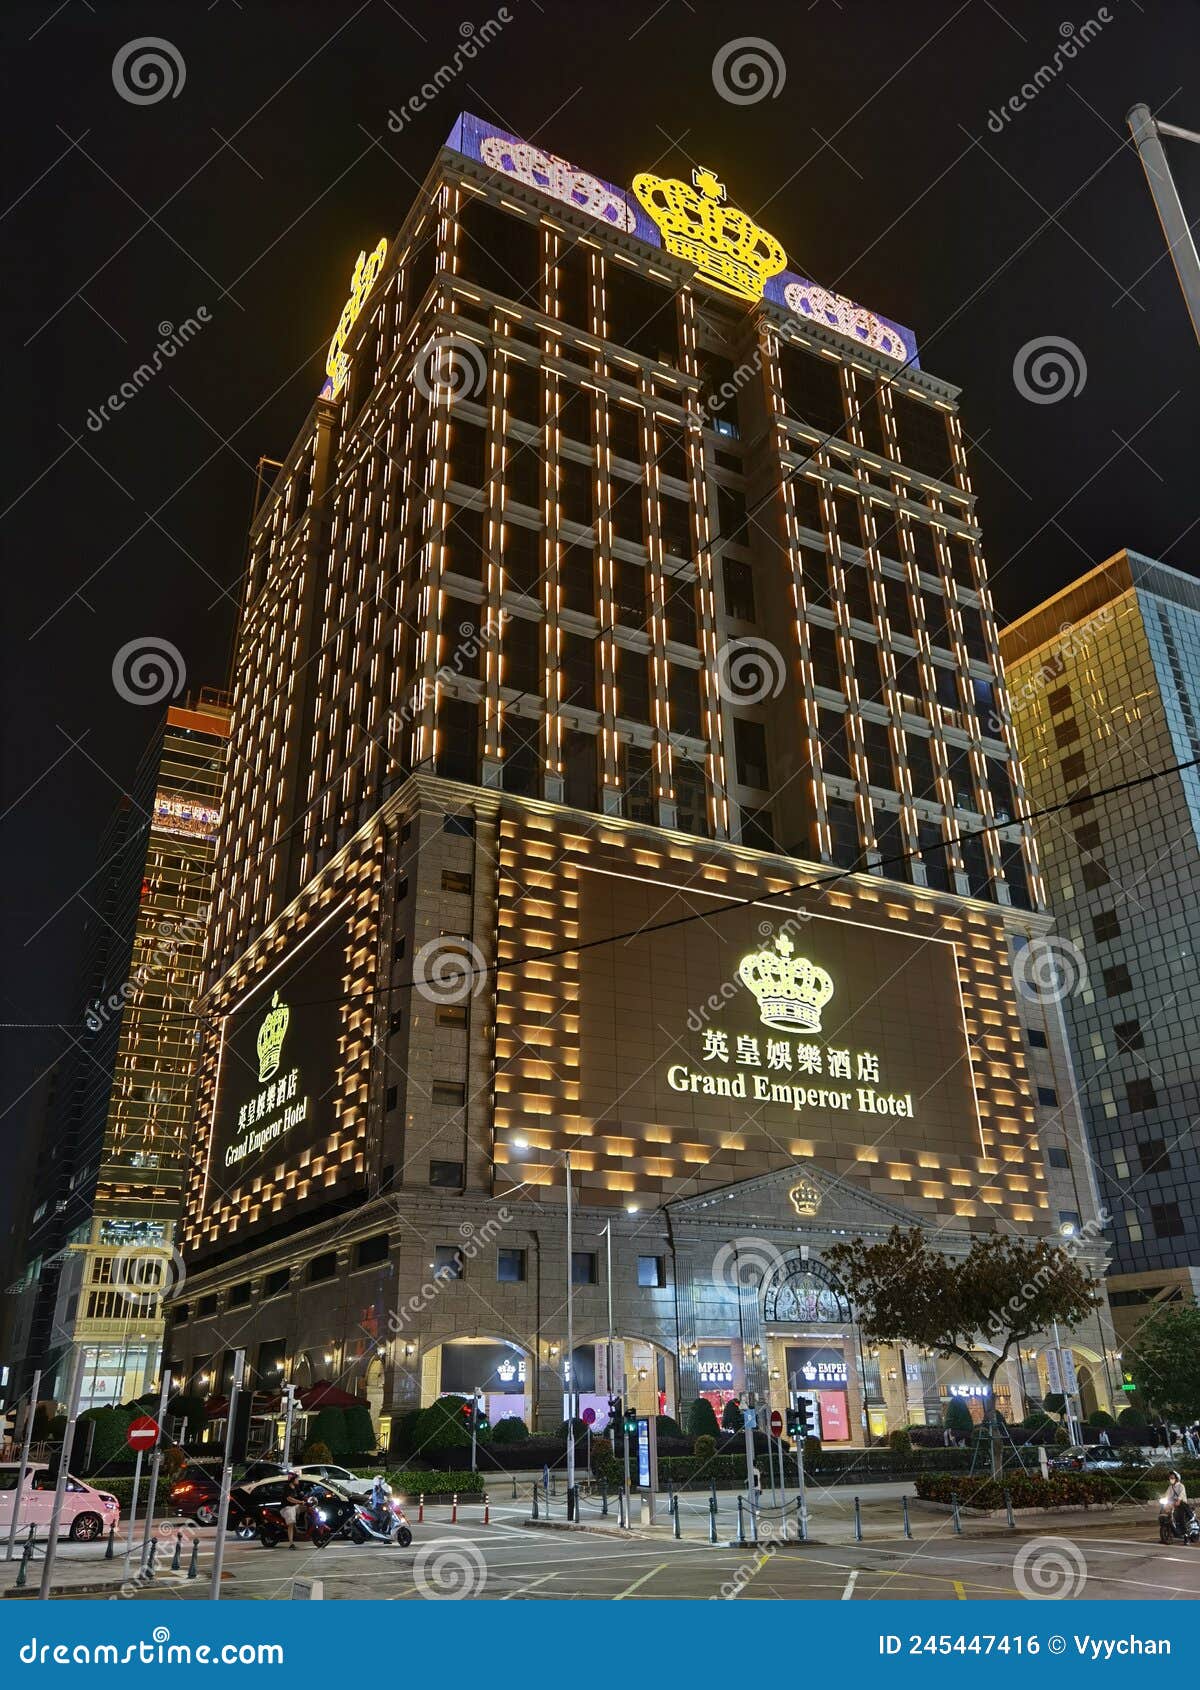 Macau Satellite Casino Macao Grand Emperor Hotel Swiss Gold Bar Credit  Suisse 999.9 Diamonds Imperial Kingdom Empire Golden Royal Editorial Photo  - Image of golden, antique: 245447416